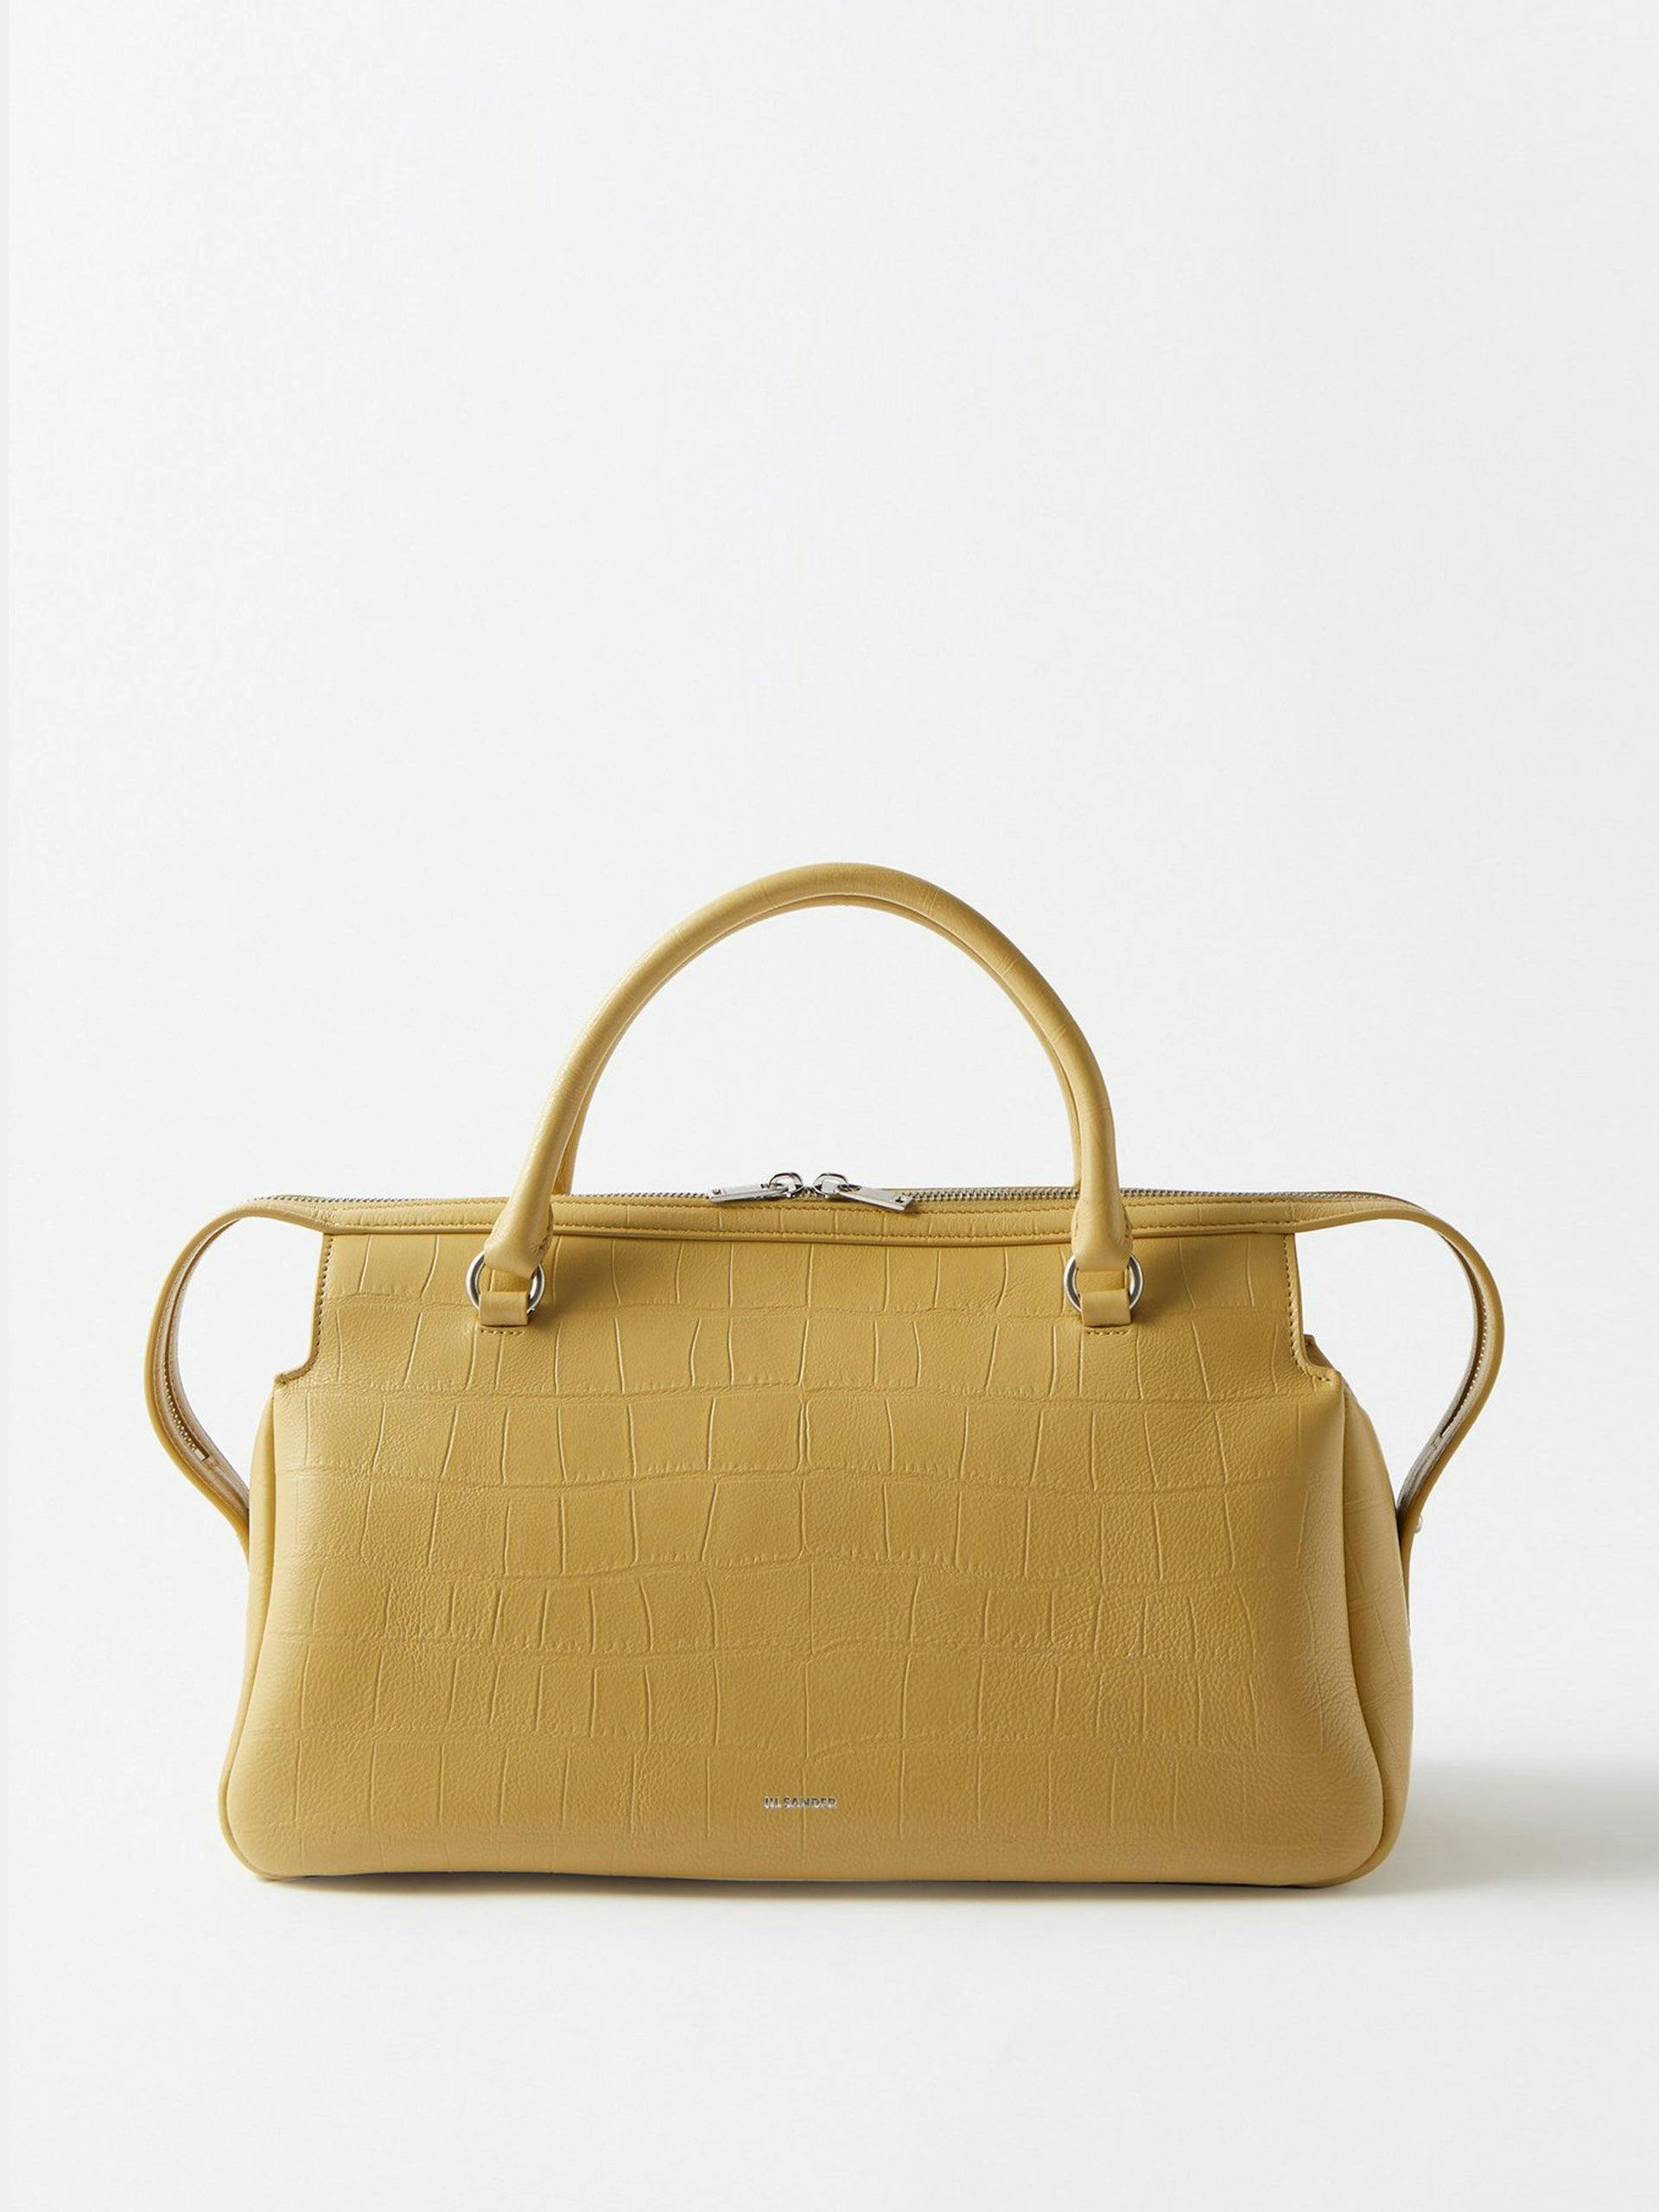 Croc-effect leather handbag